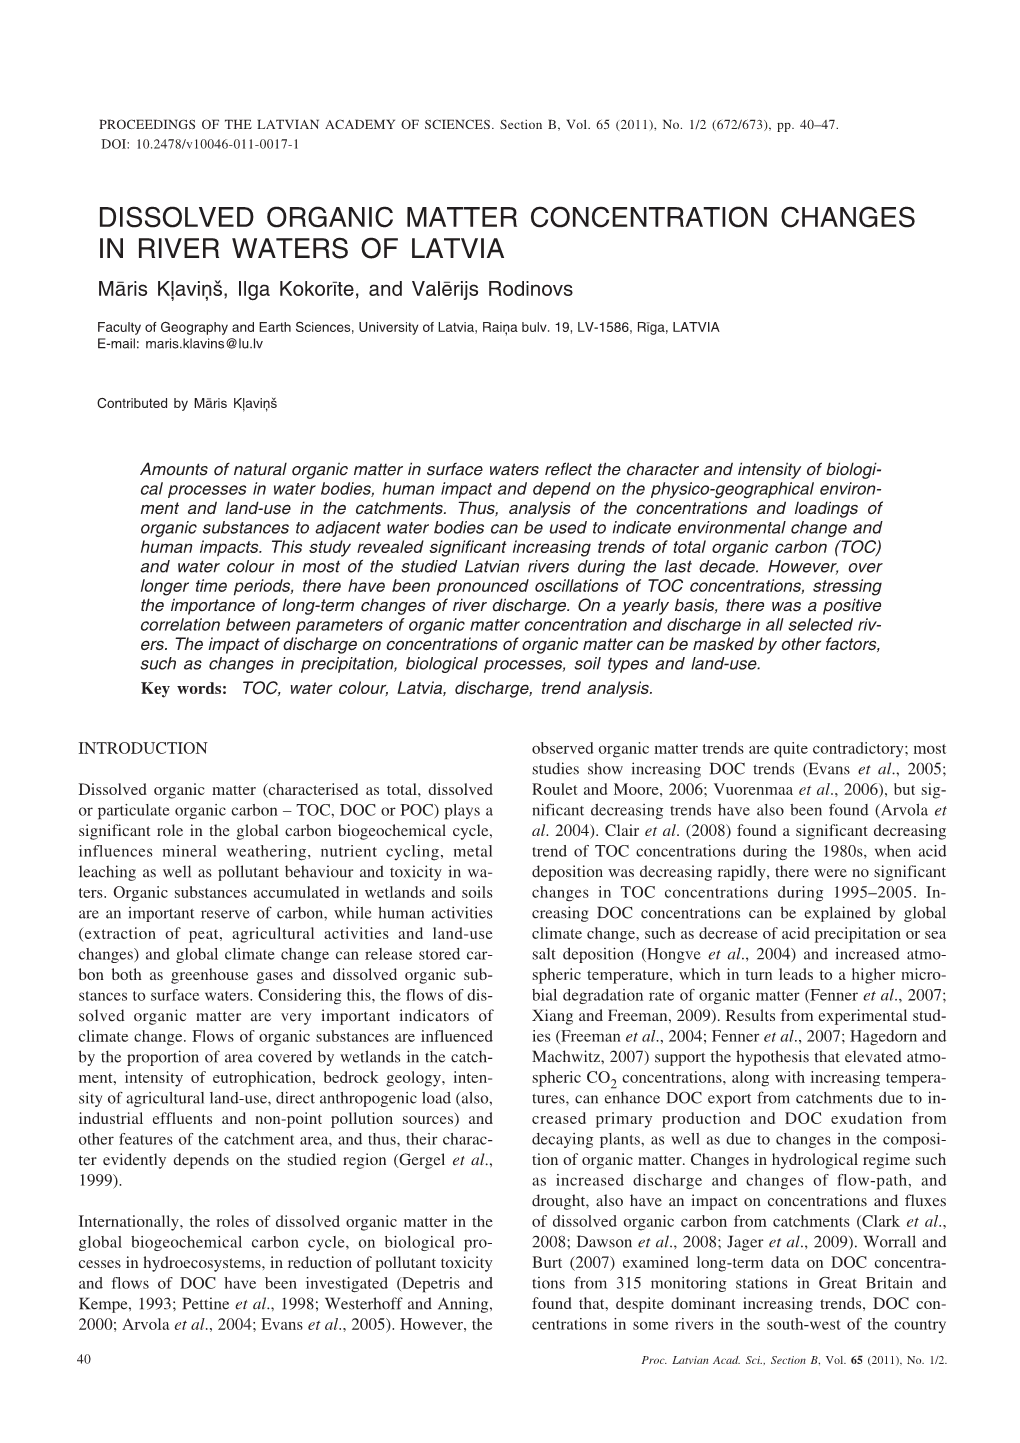 DISSOLVED ORGANIC MATTER CONCENTRATION CHANGES in RIVER WATERS of LATVIA Mâris Kïaviòð, Ilga Kokorîte, and Valçrijs Rodinovs